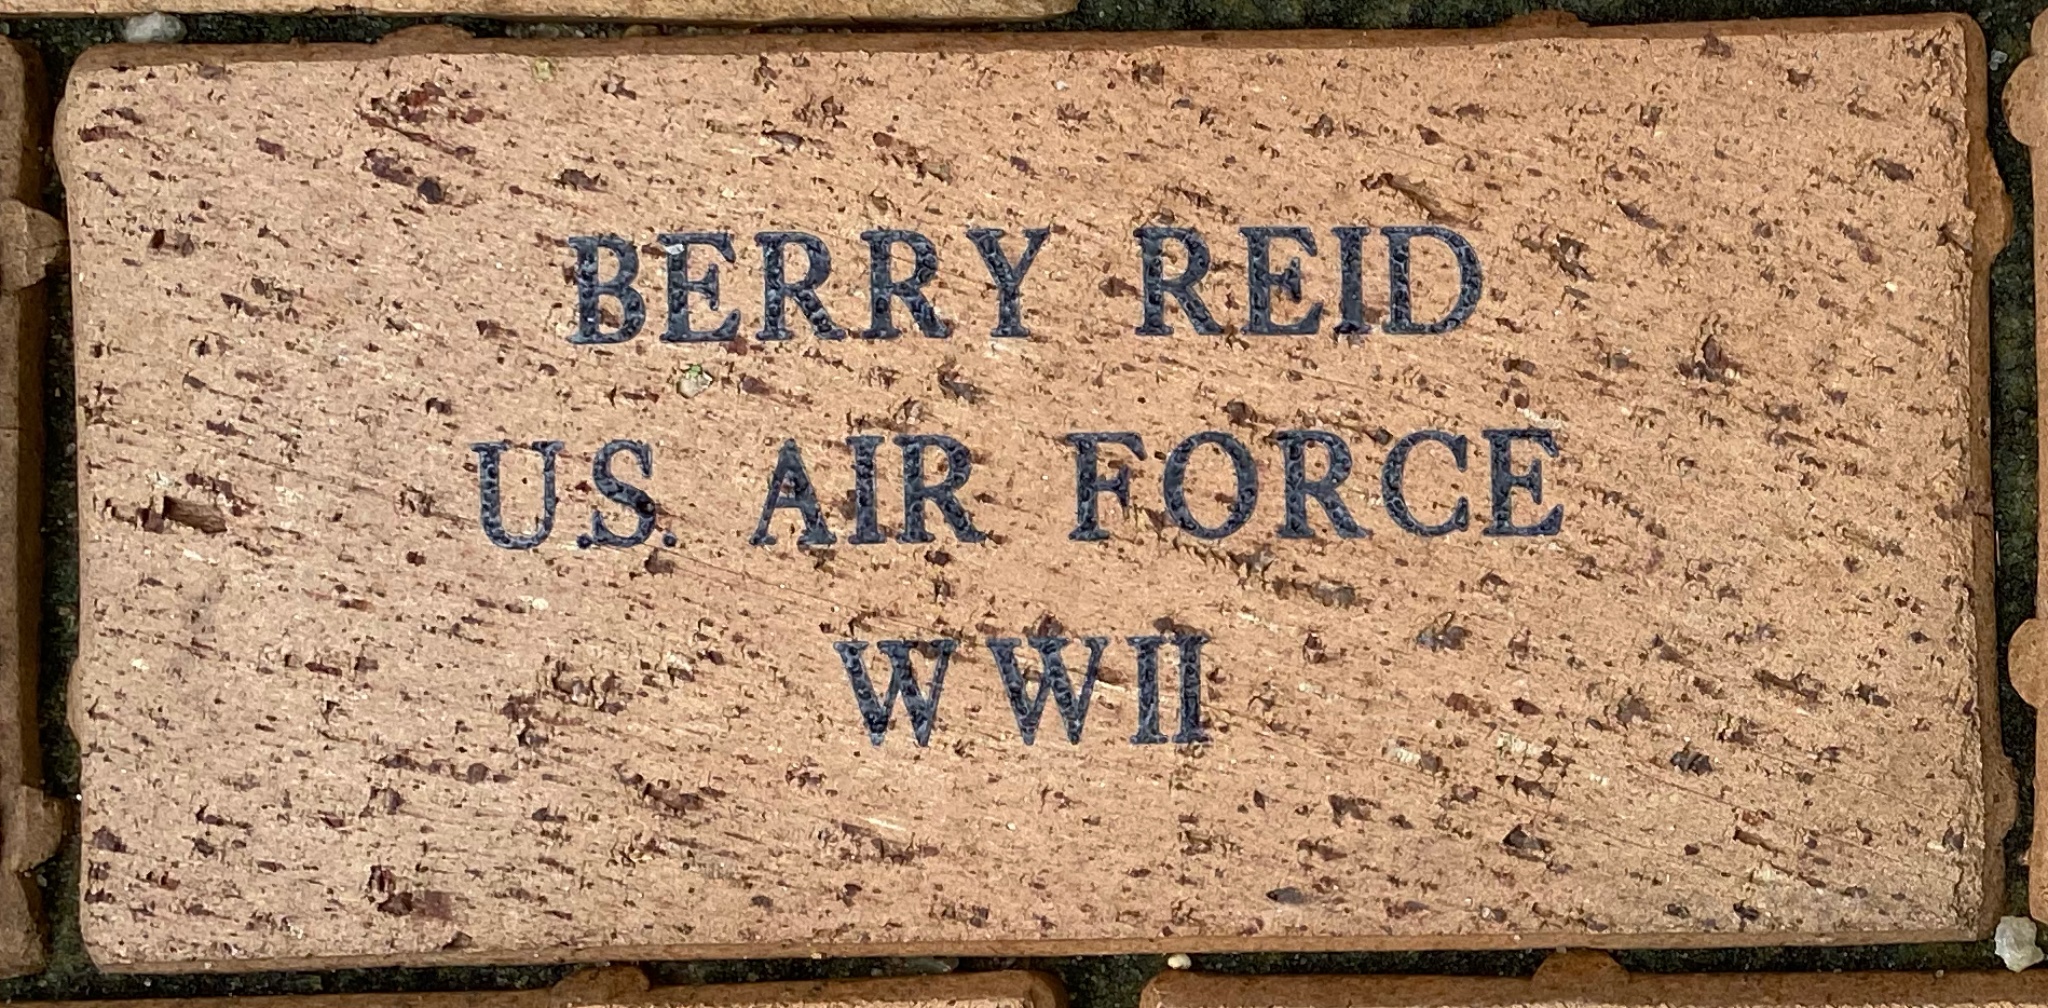 BERRY REID U.S. Air Force WWII